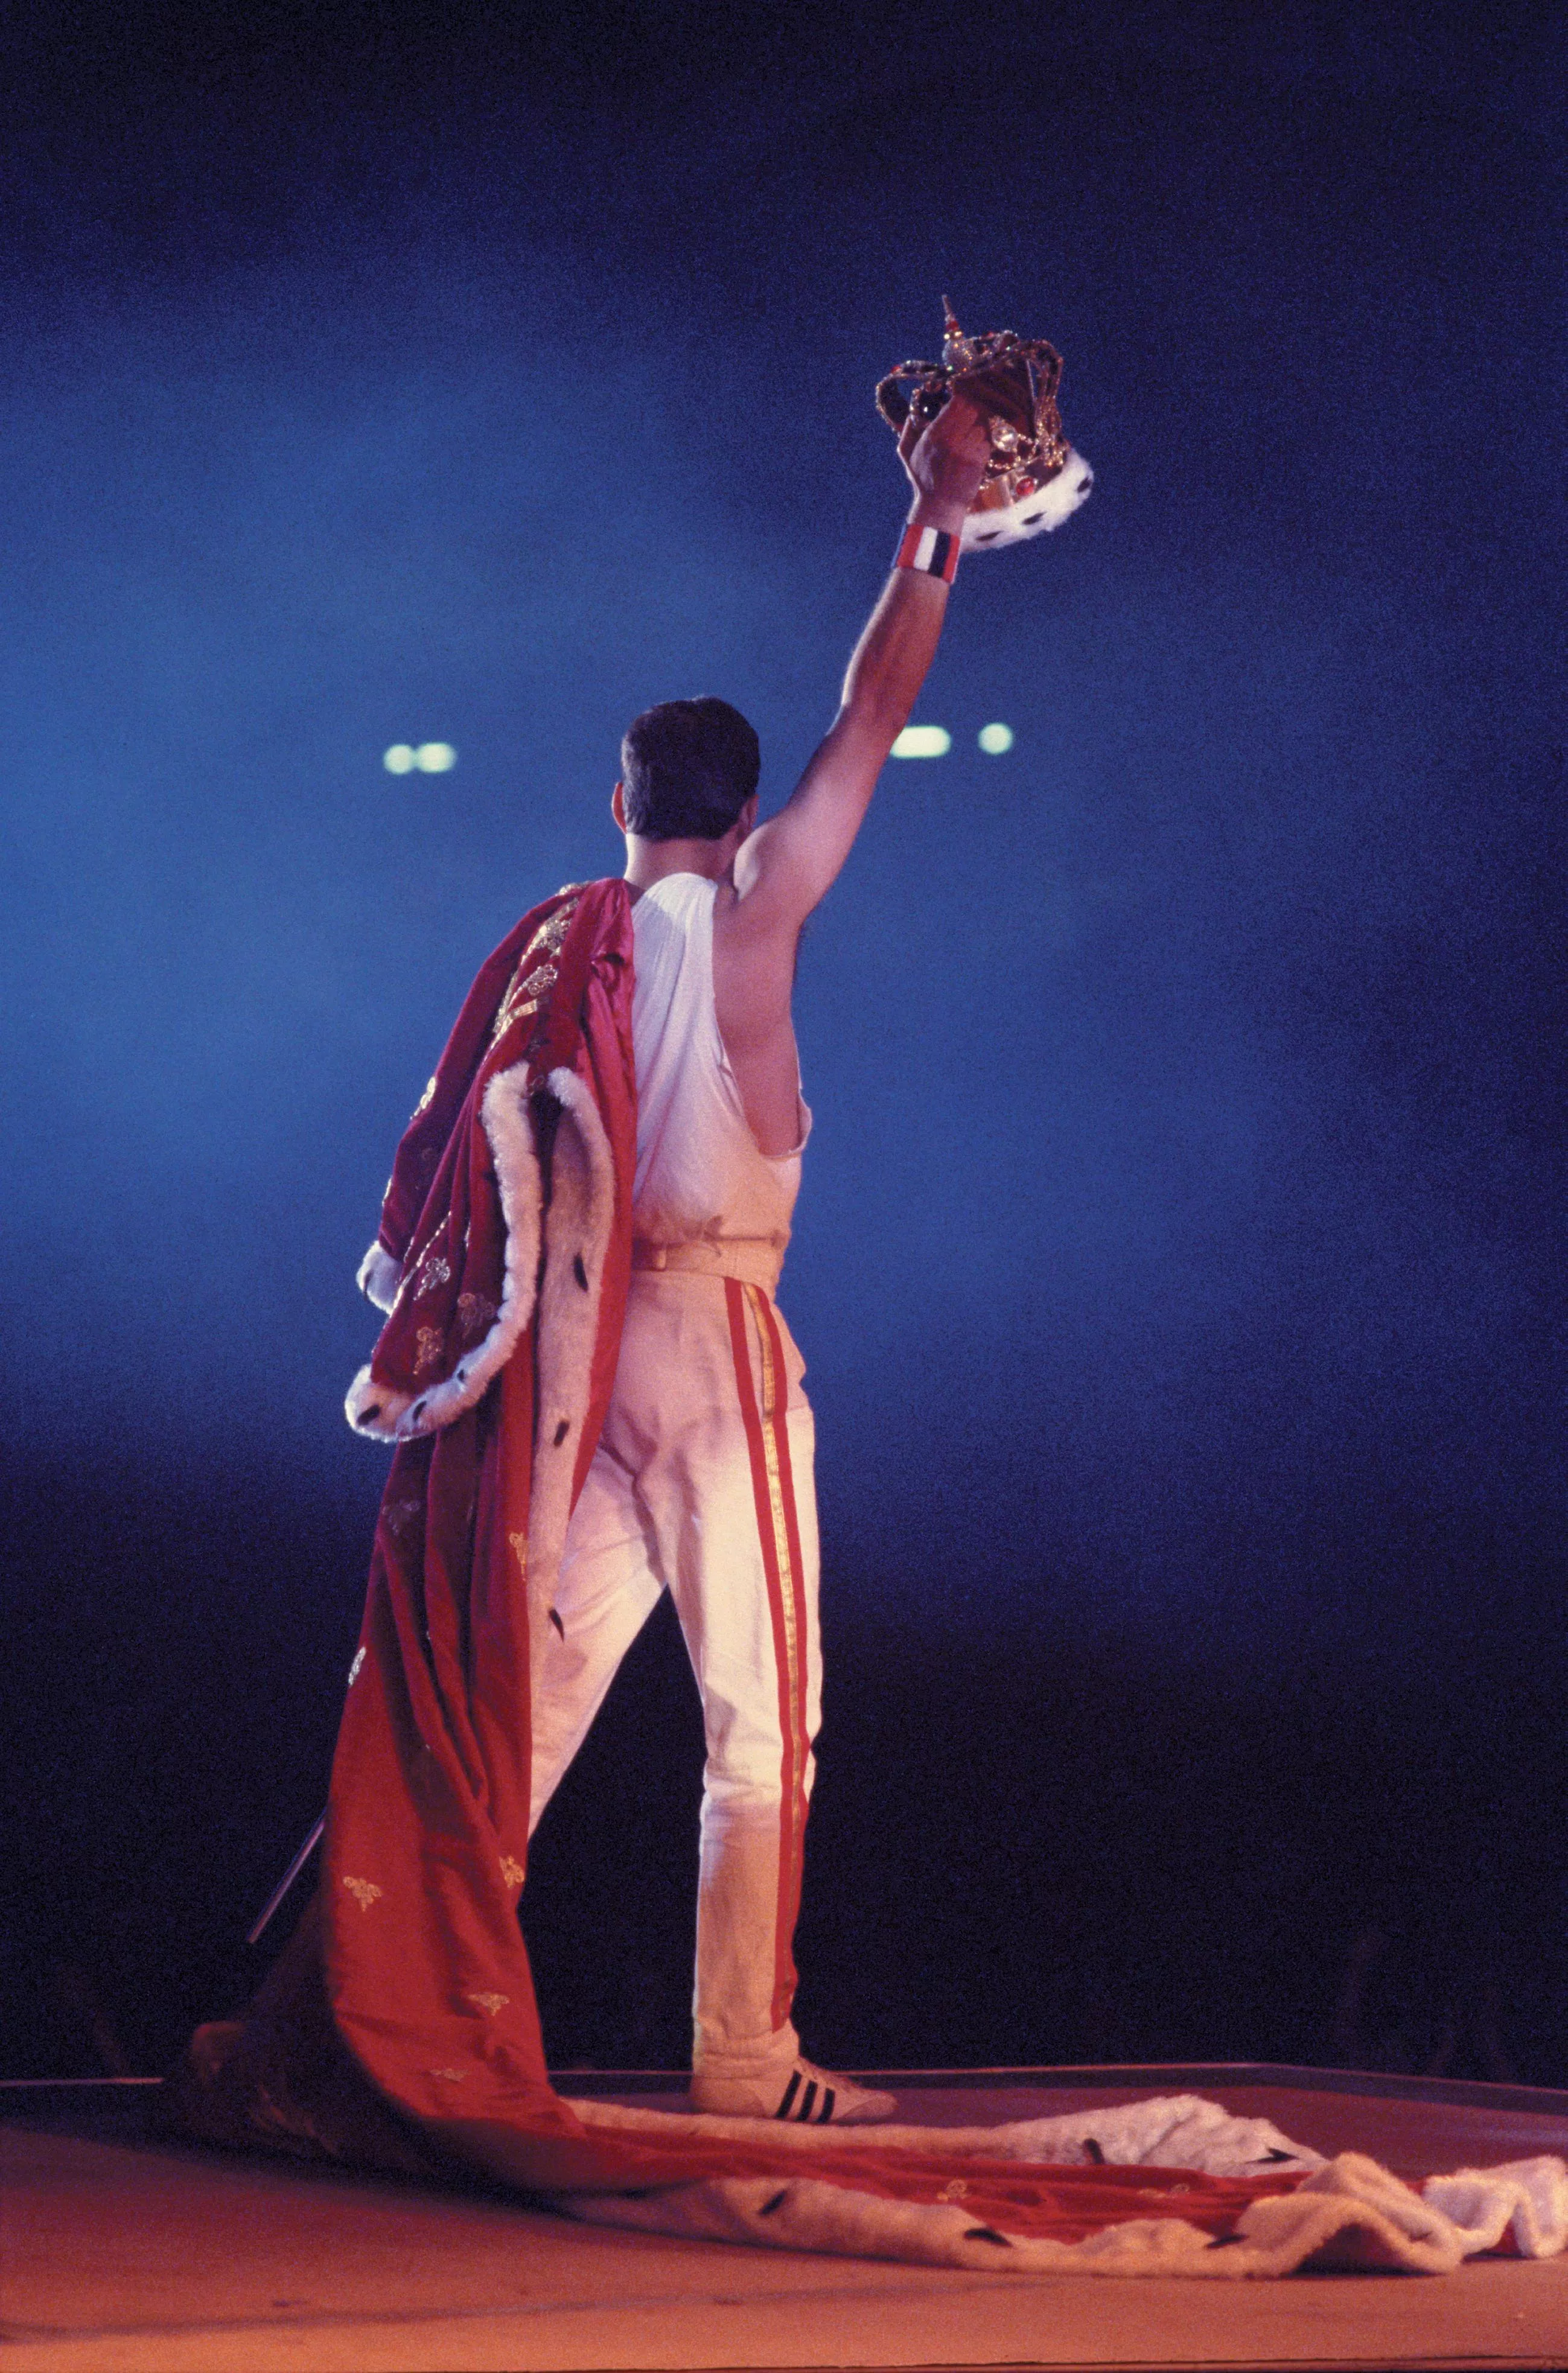 Freddie Mercurys grav hittad?